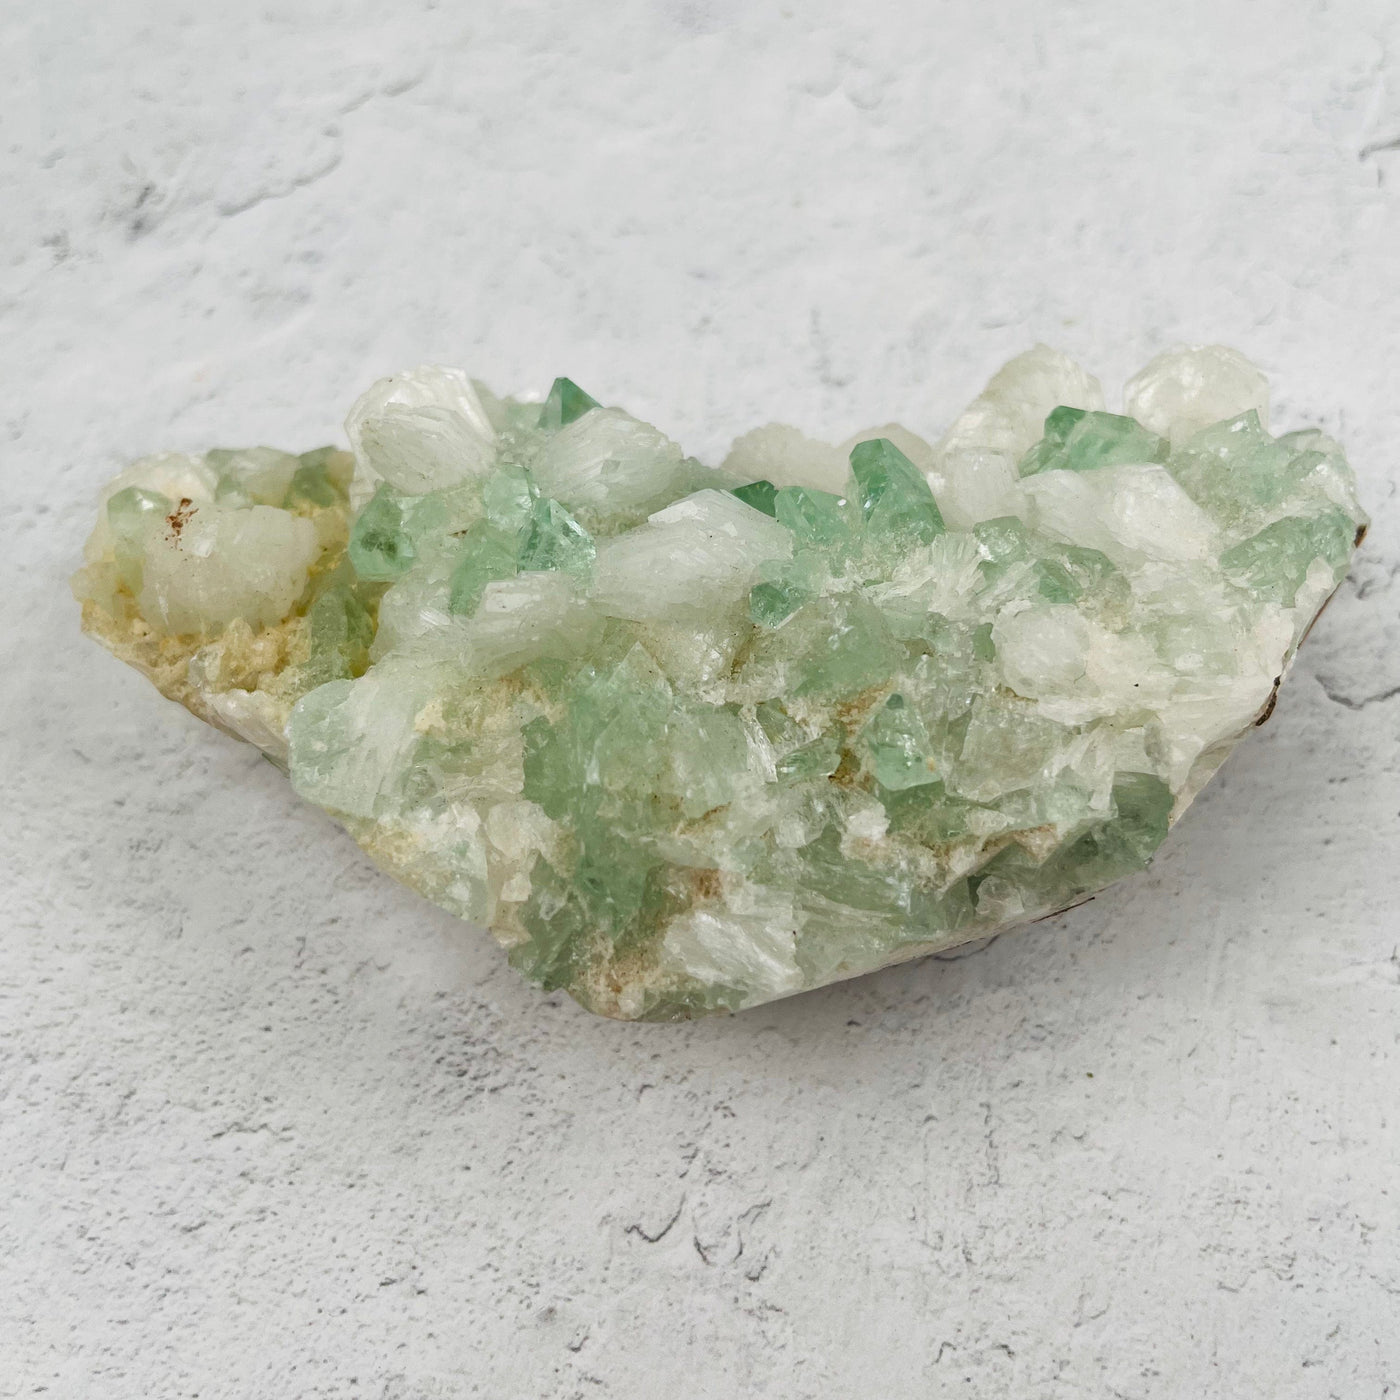 Green Apophyllite with Stilbite Crystal Clusters Zeolitesv - side View